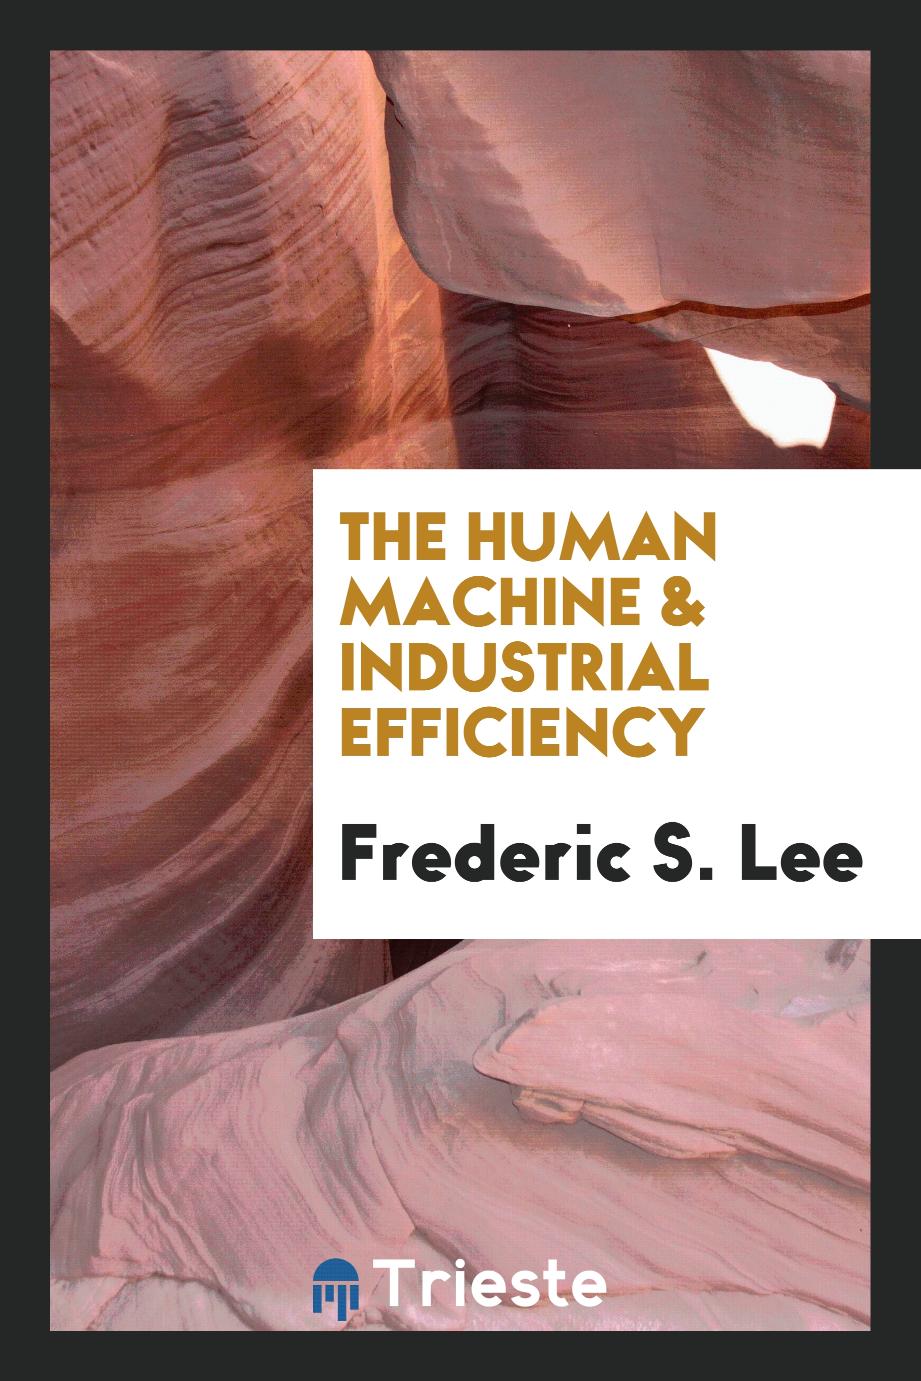 The Human Machine & Industrial Efficiency